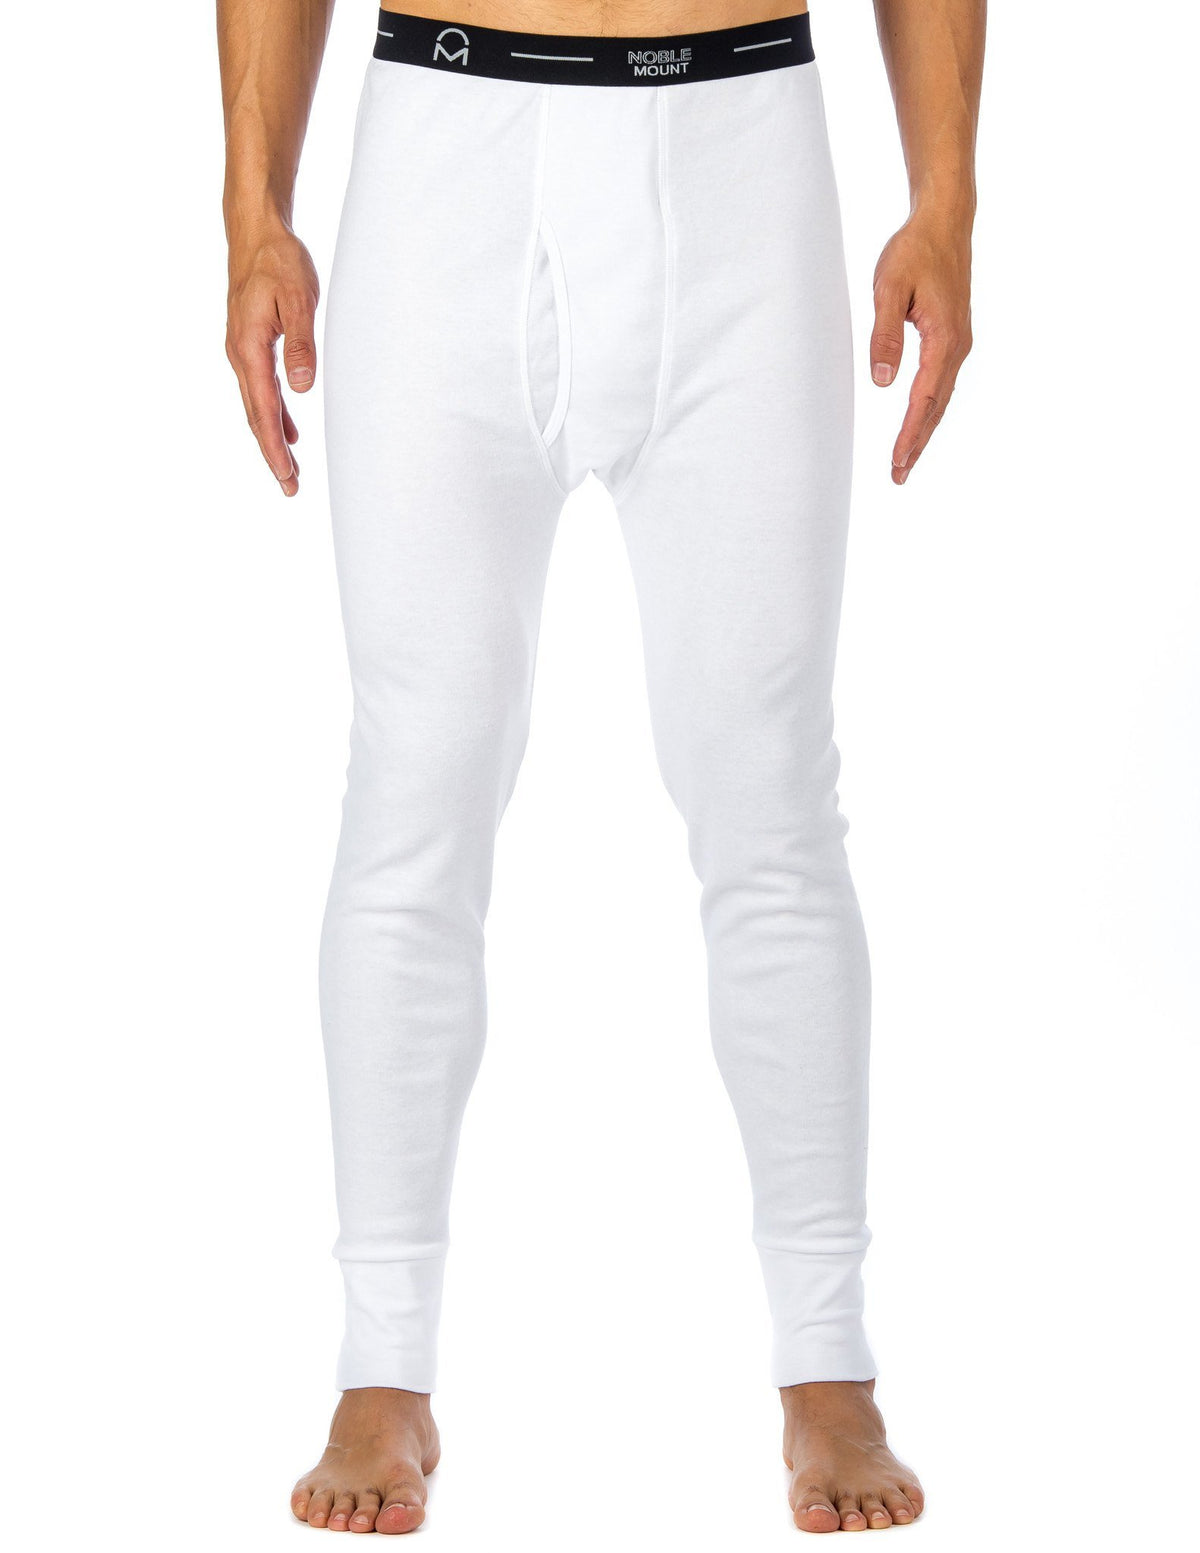 Men's 'Soft Comfort' Premium Thermal Long John Pants - White